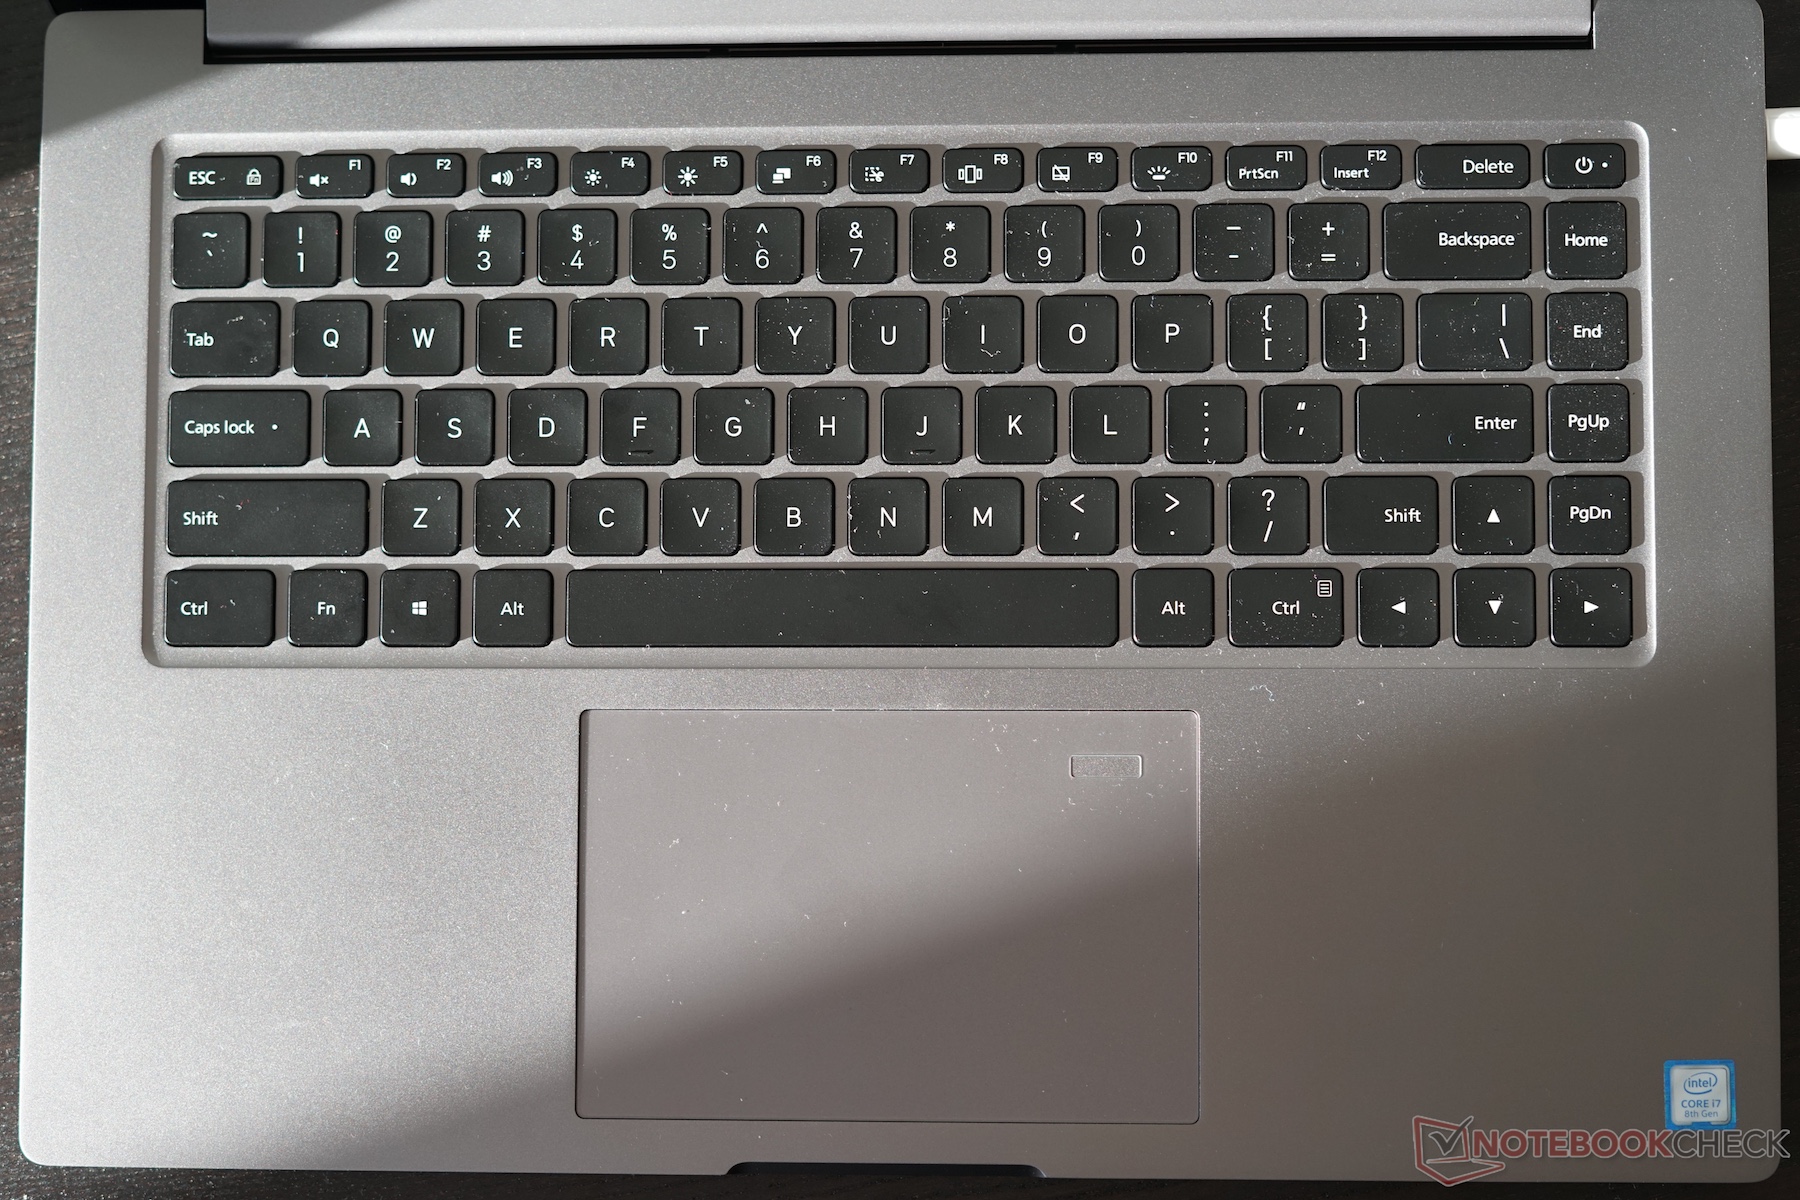 Xiaomi Mi Notebook Pro I7 8550u Laptop Review Notebookcheck